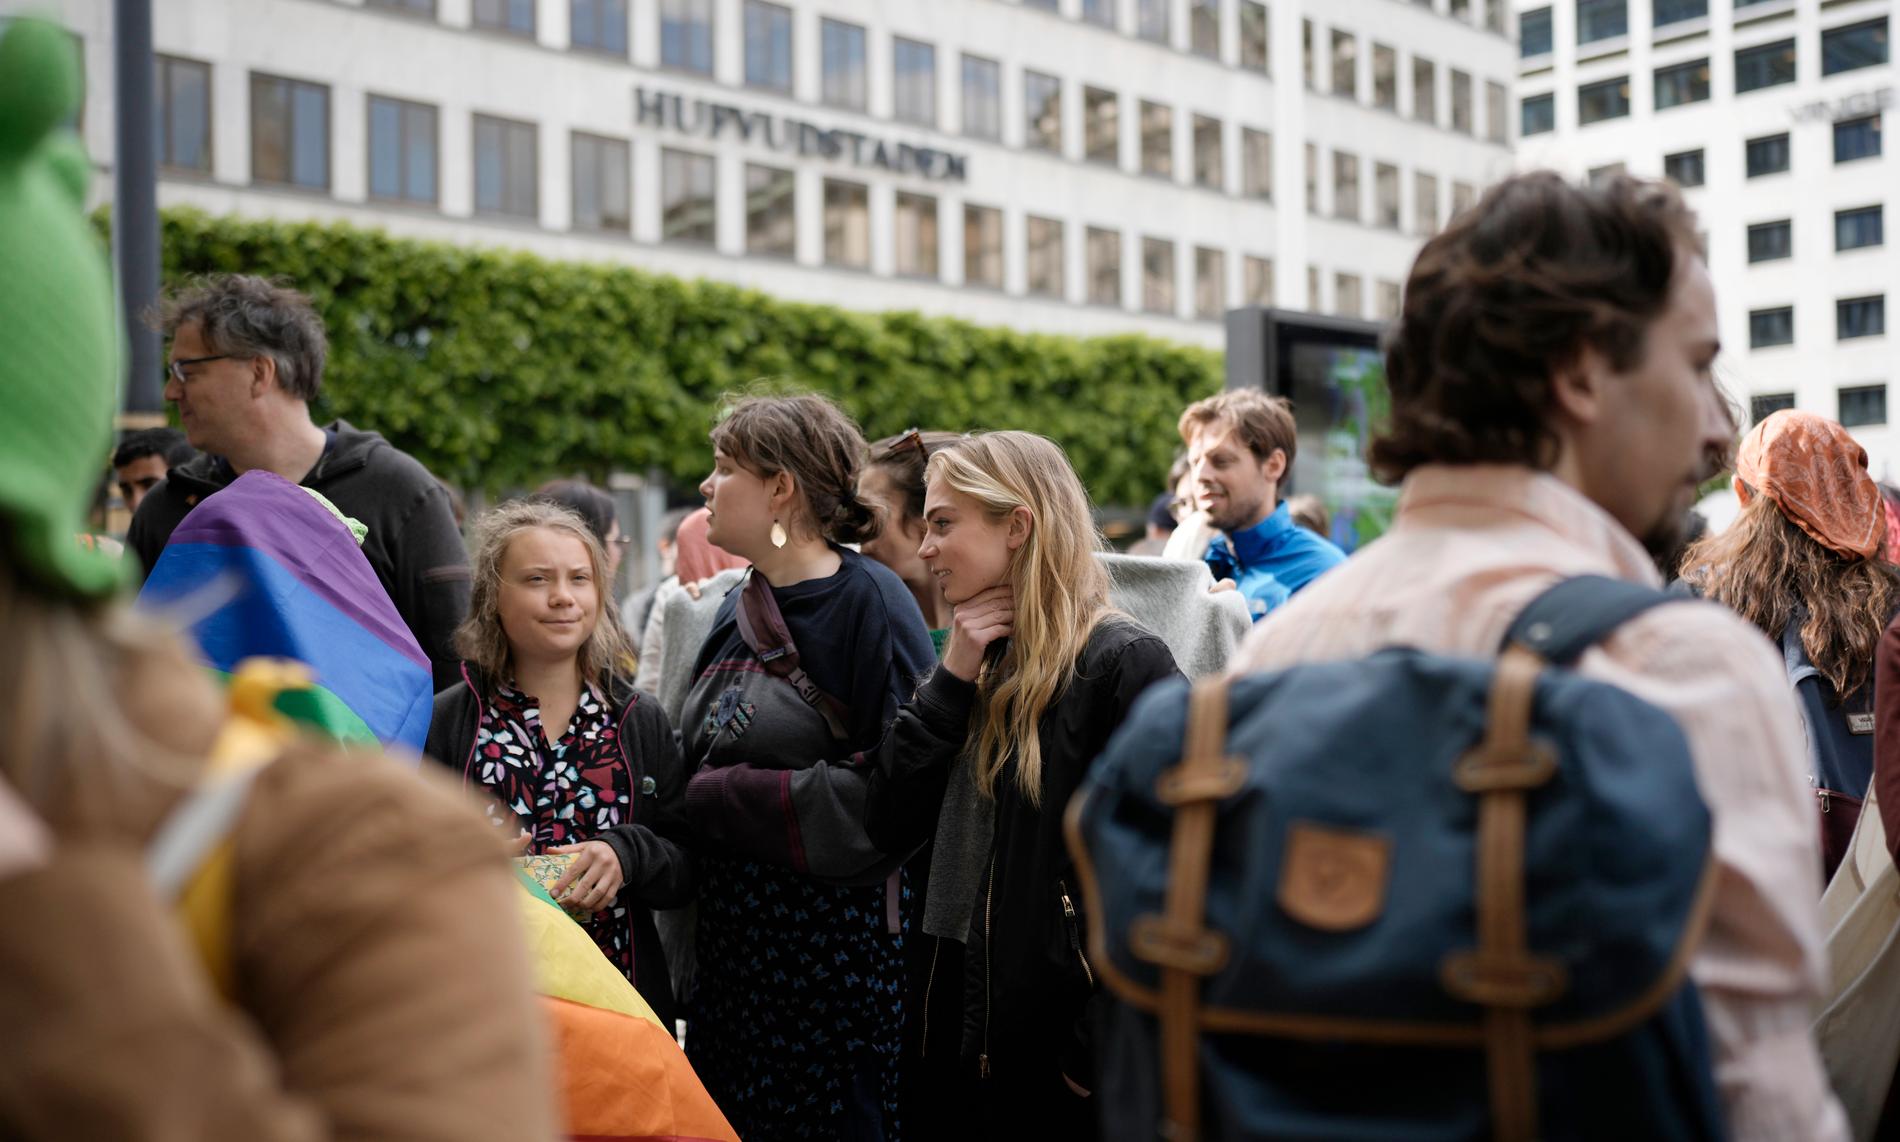 Klimataktivisten Greta Thunberg deltog i Fridays for futures demonstration som avslutades vid Norrmalmstorg i Stockholm.